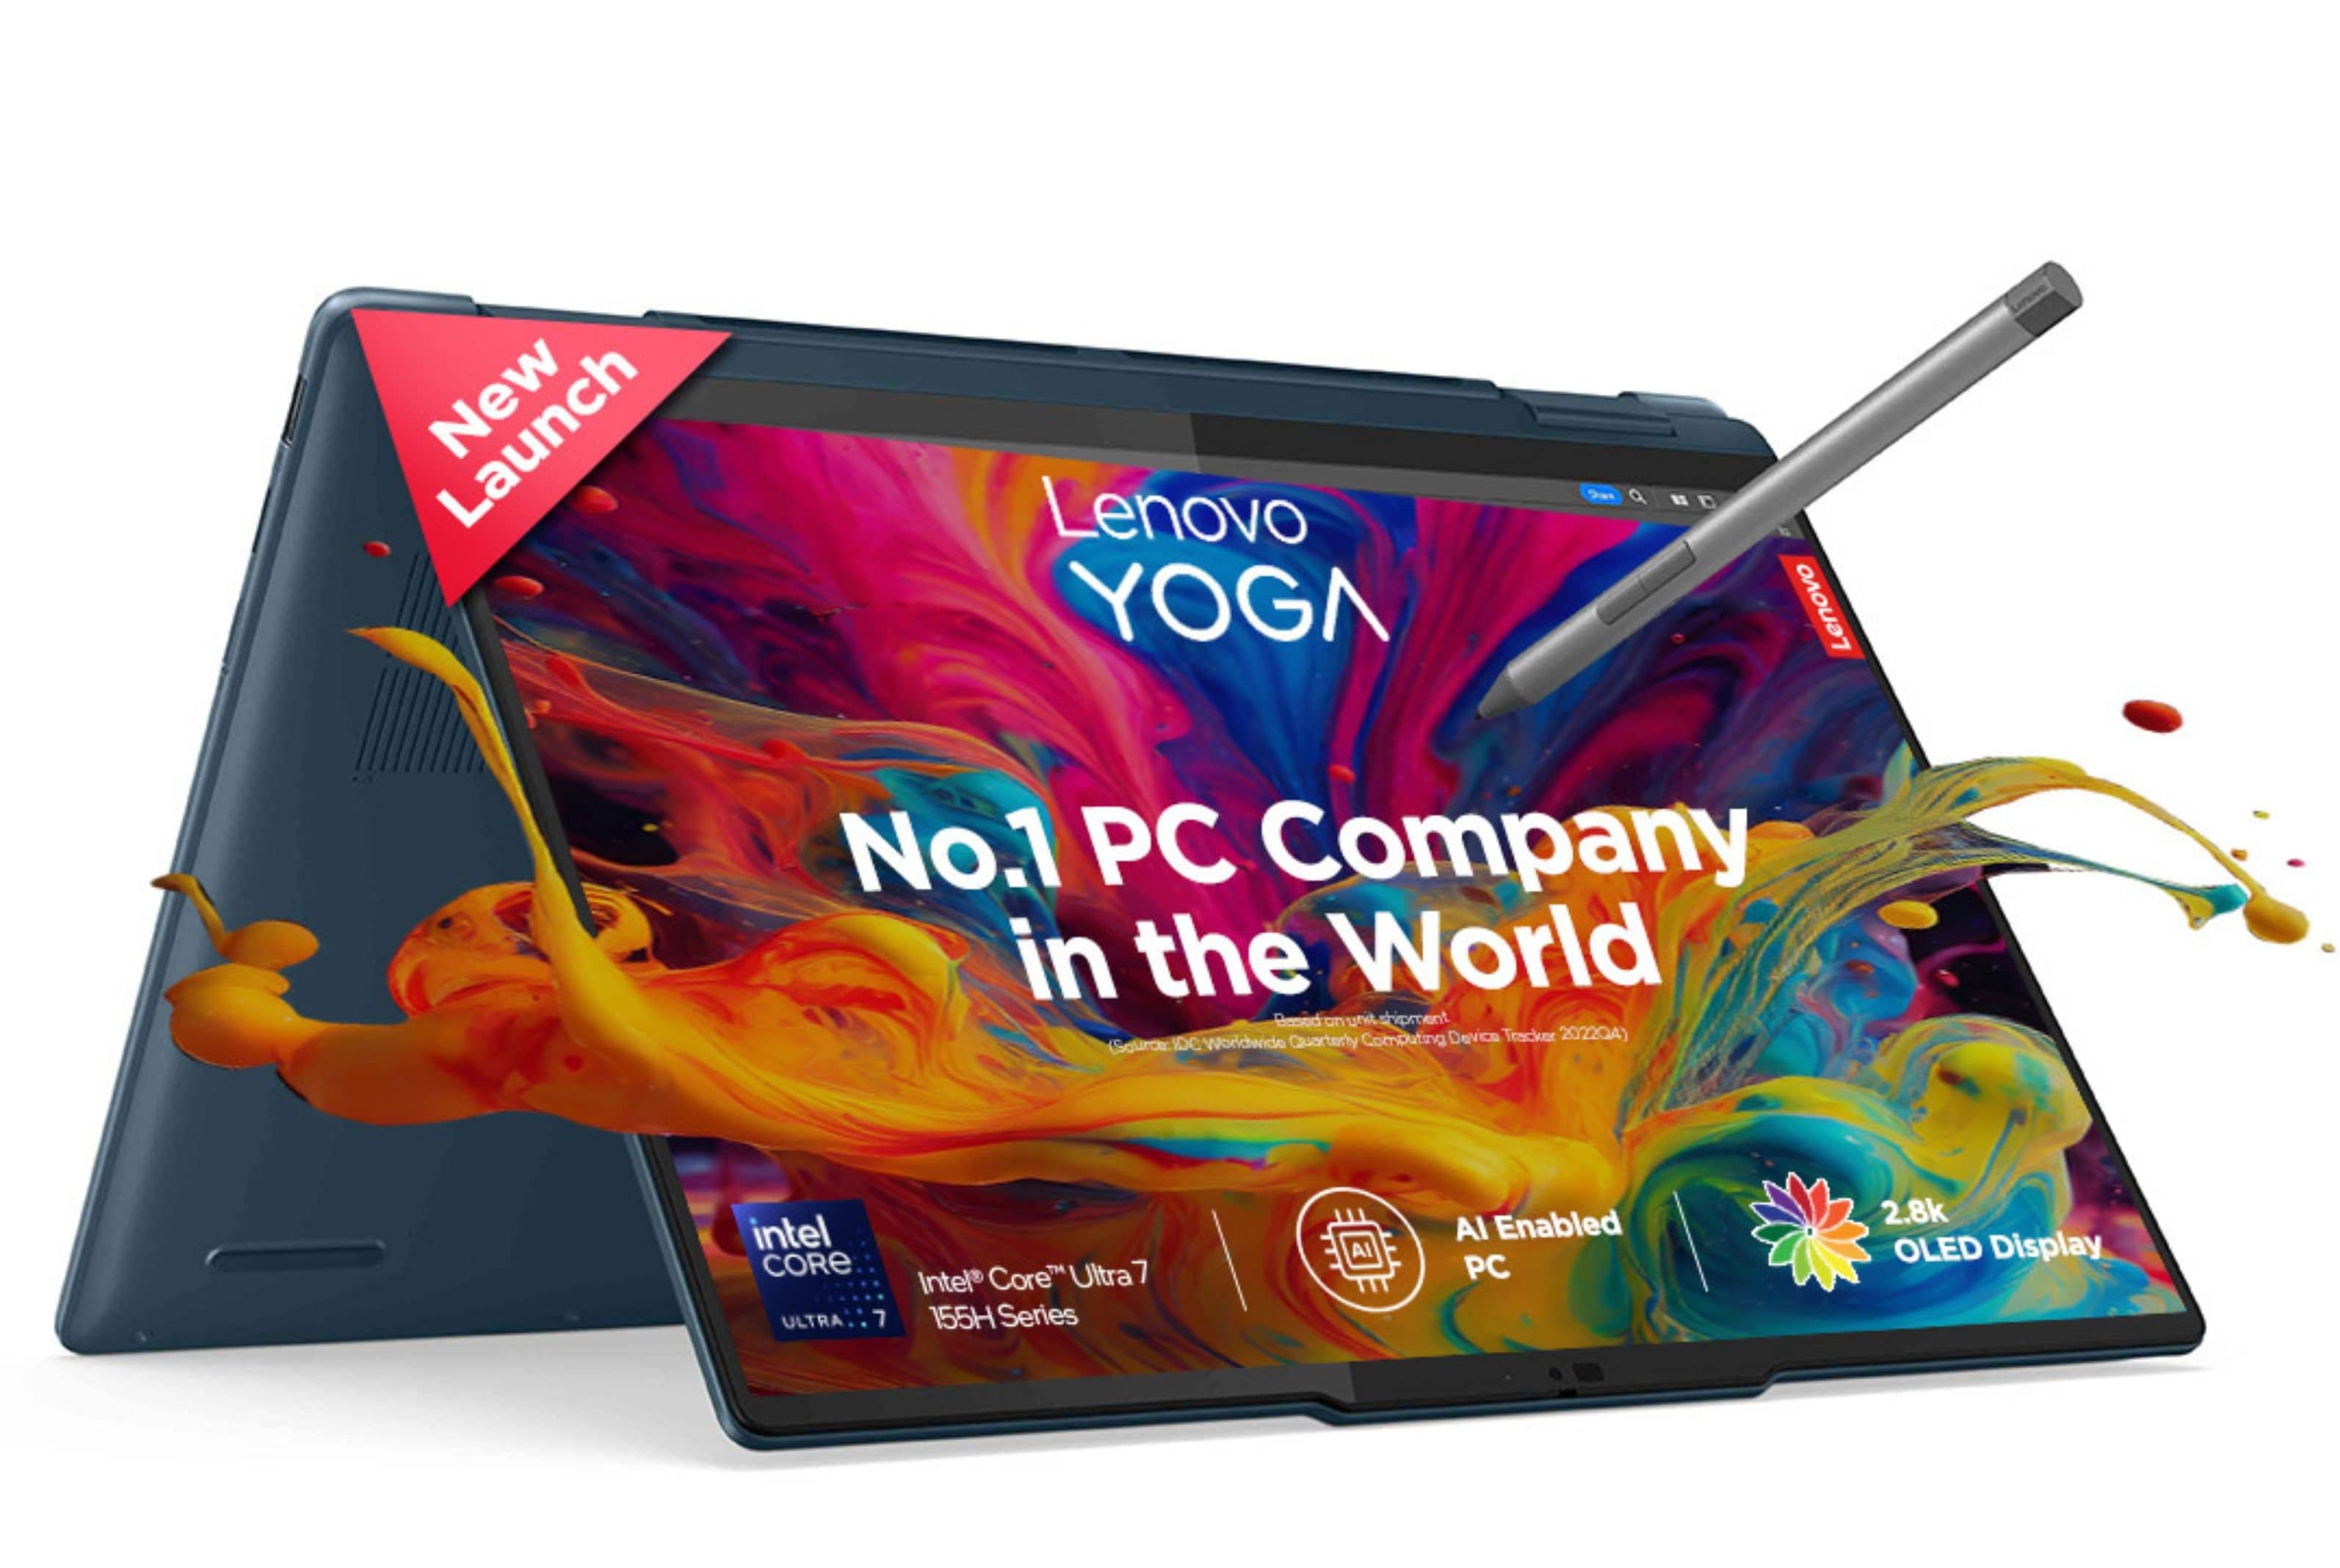 Yoga-7i-2in1-Intel-35.56cms-Core-Ultra-7.jpg